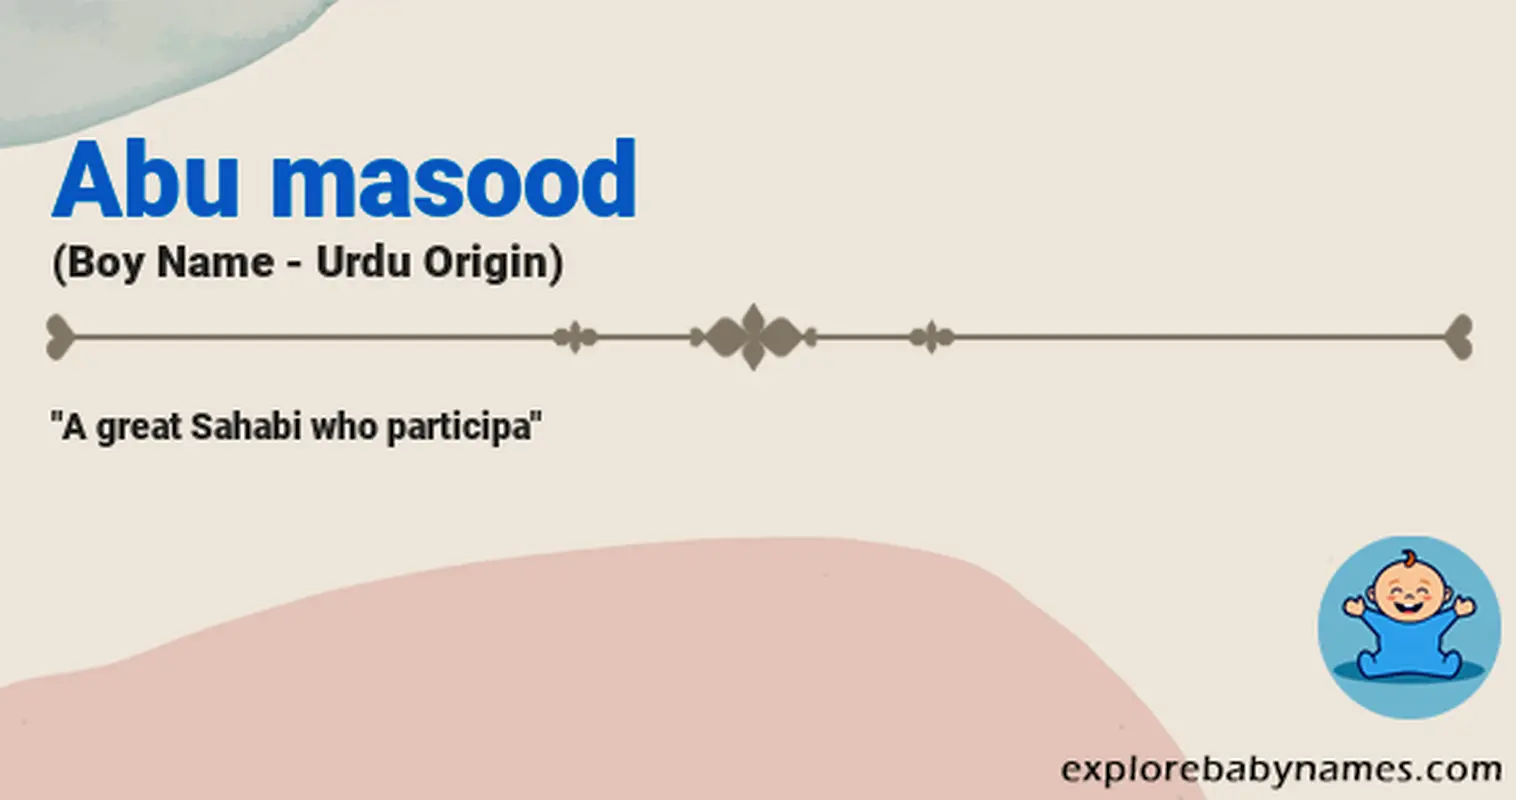 Meaning of Abu masood